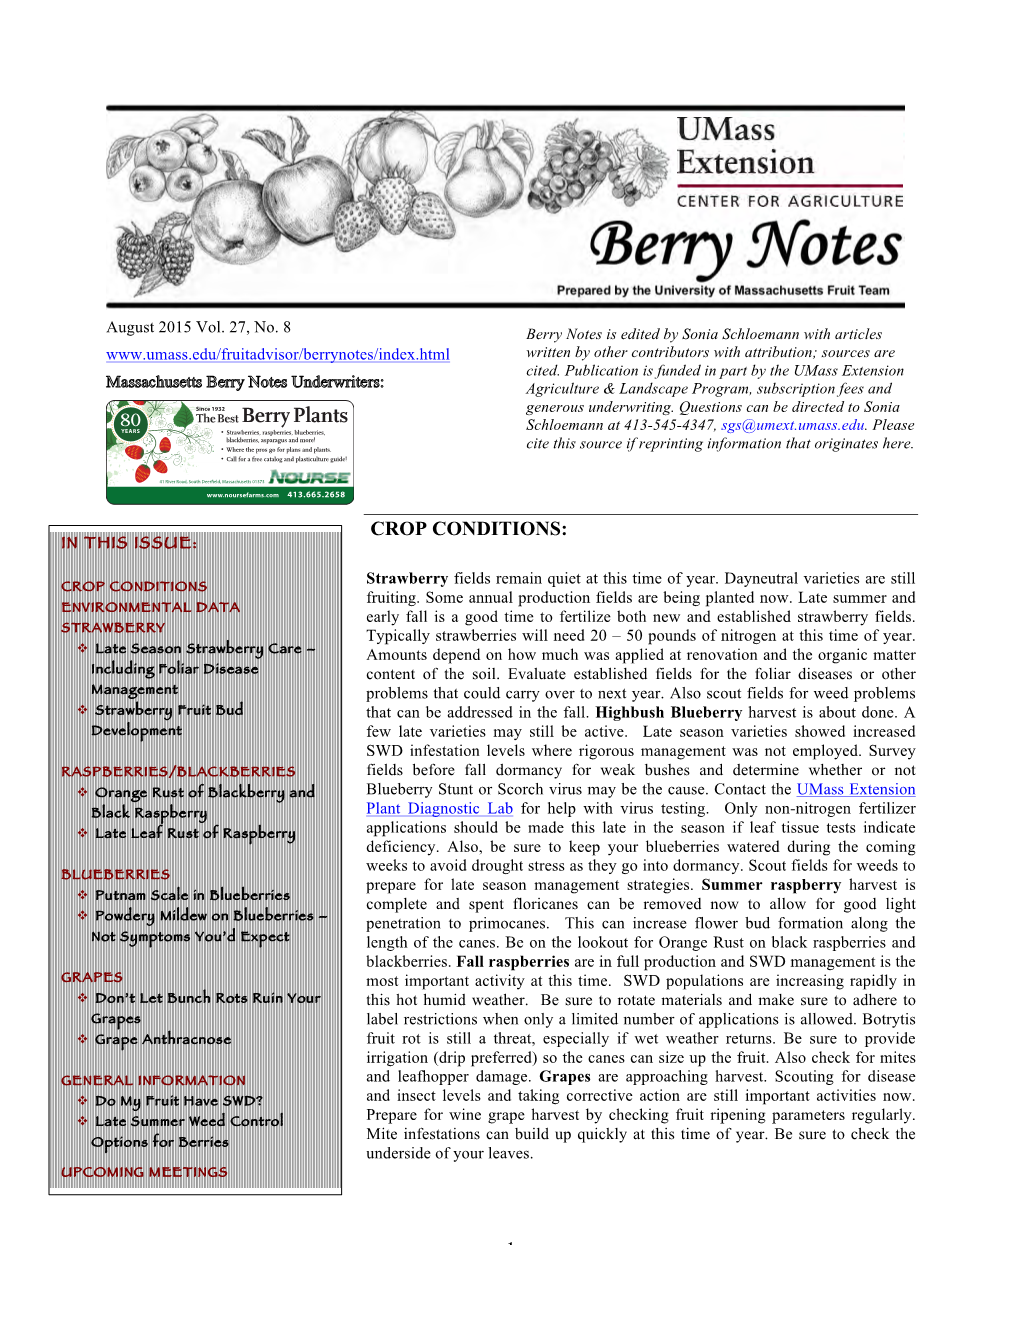 Berry Plants YEARS • Strawberries, Raspberries, Blueberries, Schloemann at 413-545-4347, Sgs@Umext.Umass.Edu